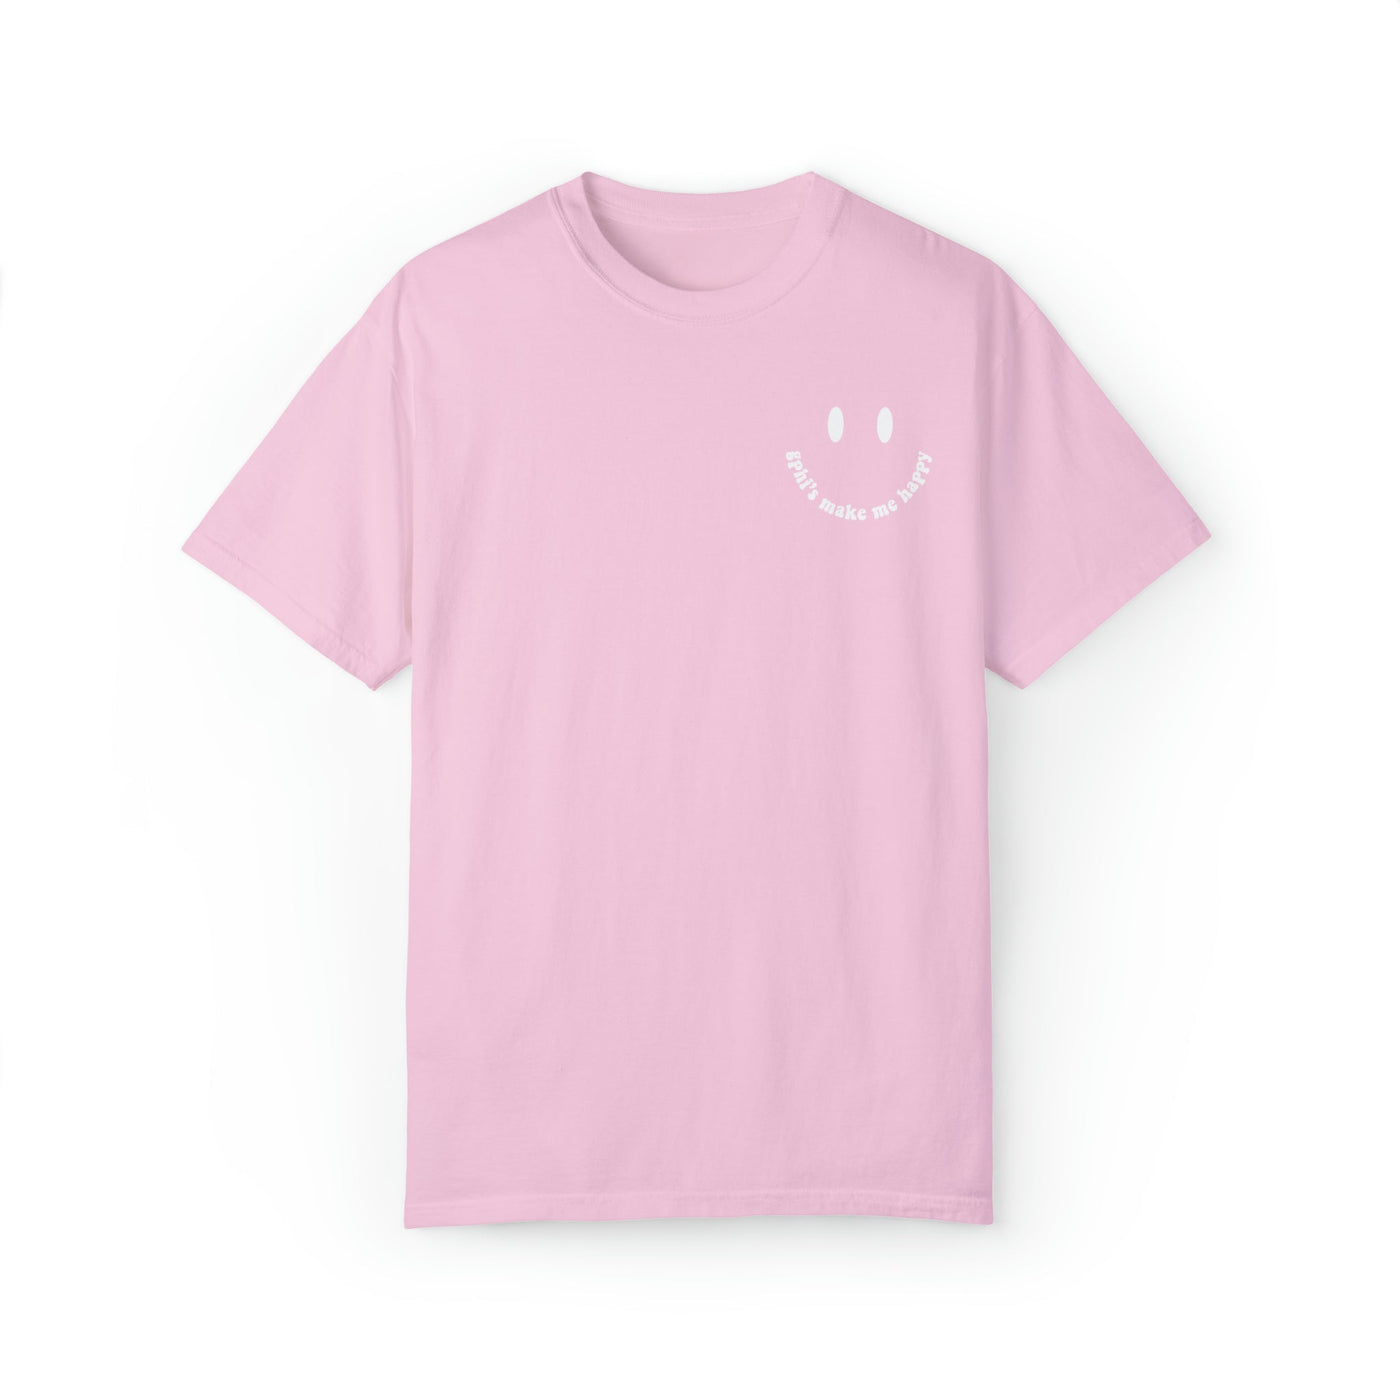 Gamma Phi Beta Make Me Happy Sorority Comfy T-shirt